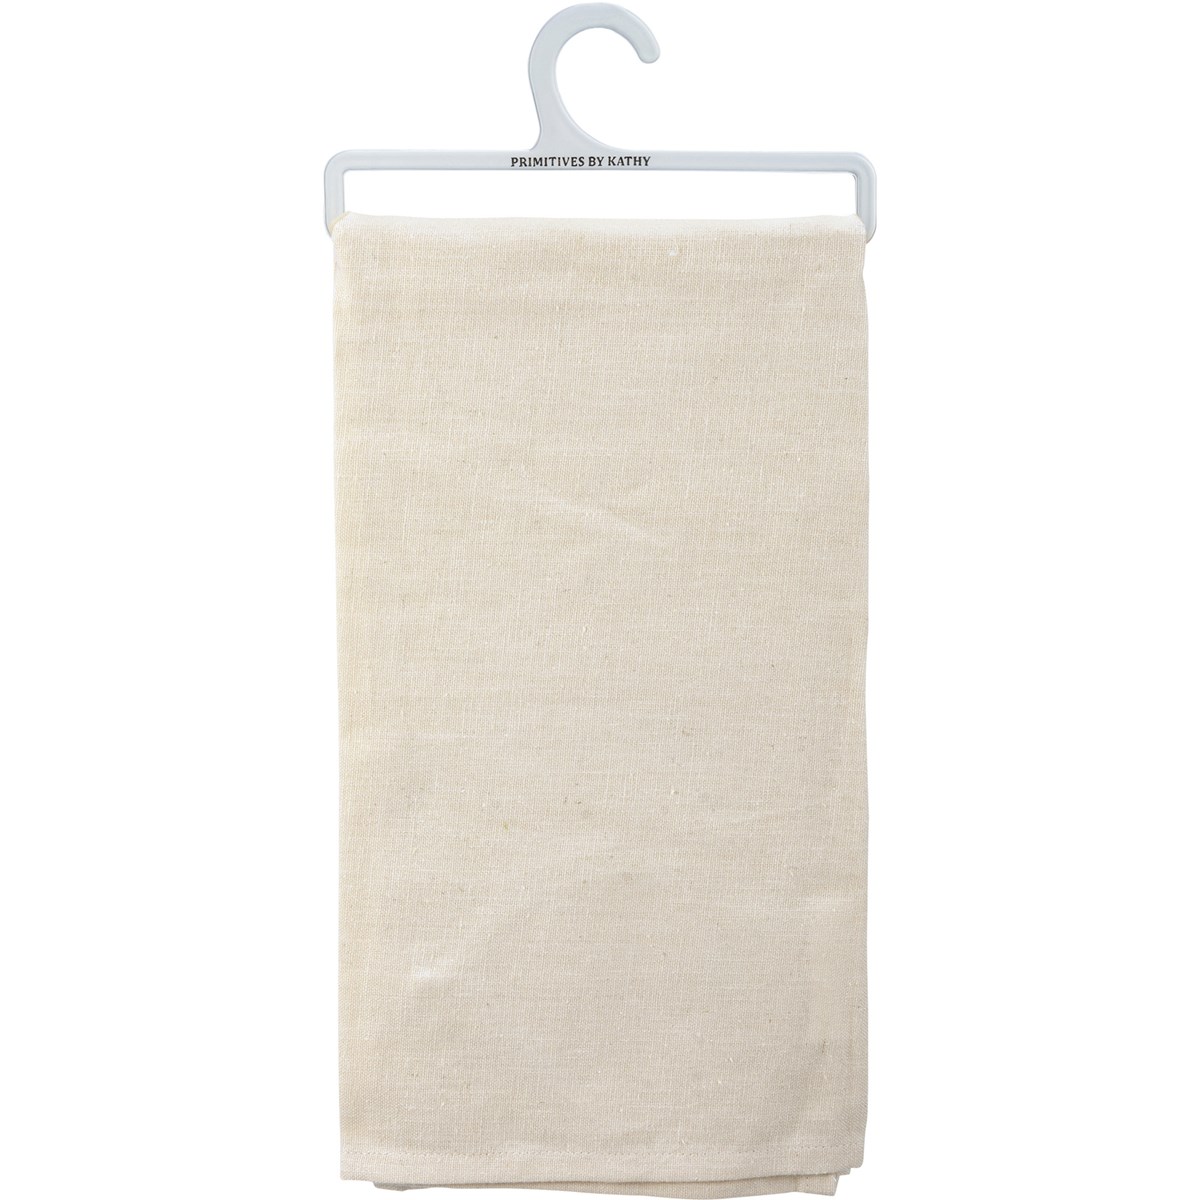 Less People More Cats Kitchen Towel - Cotton, Linen